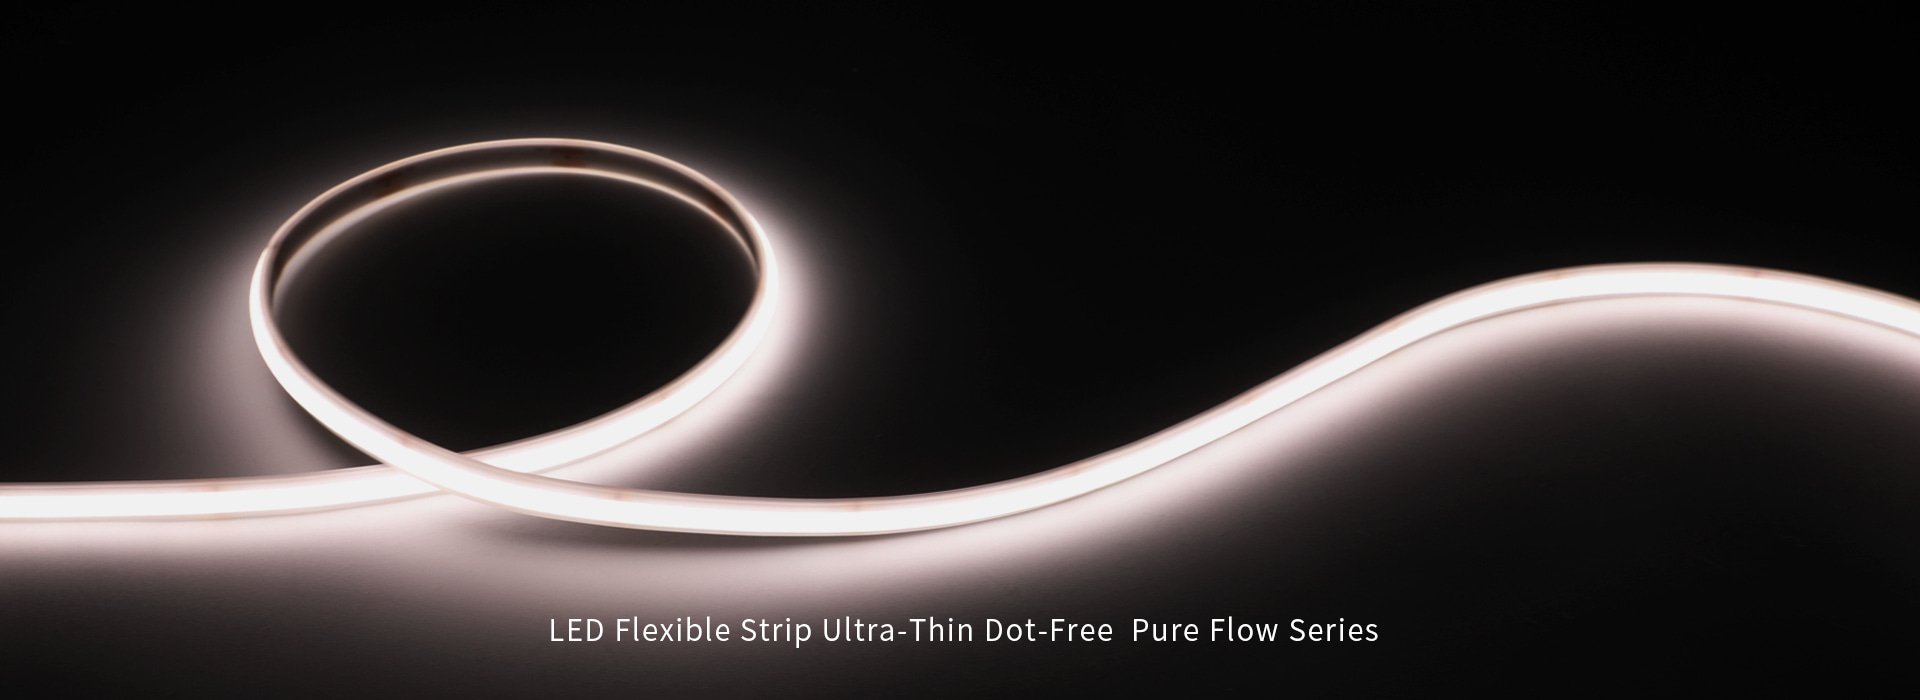 Tira flexible de LED Serie Pure Flow Ultrafina Sin puntos